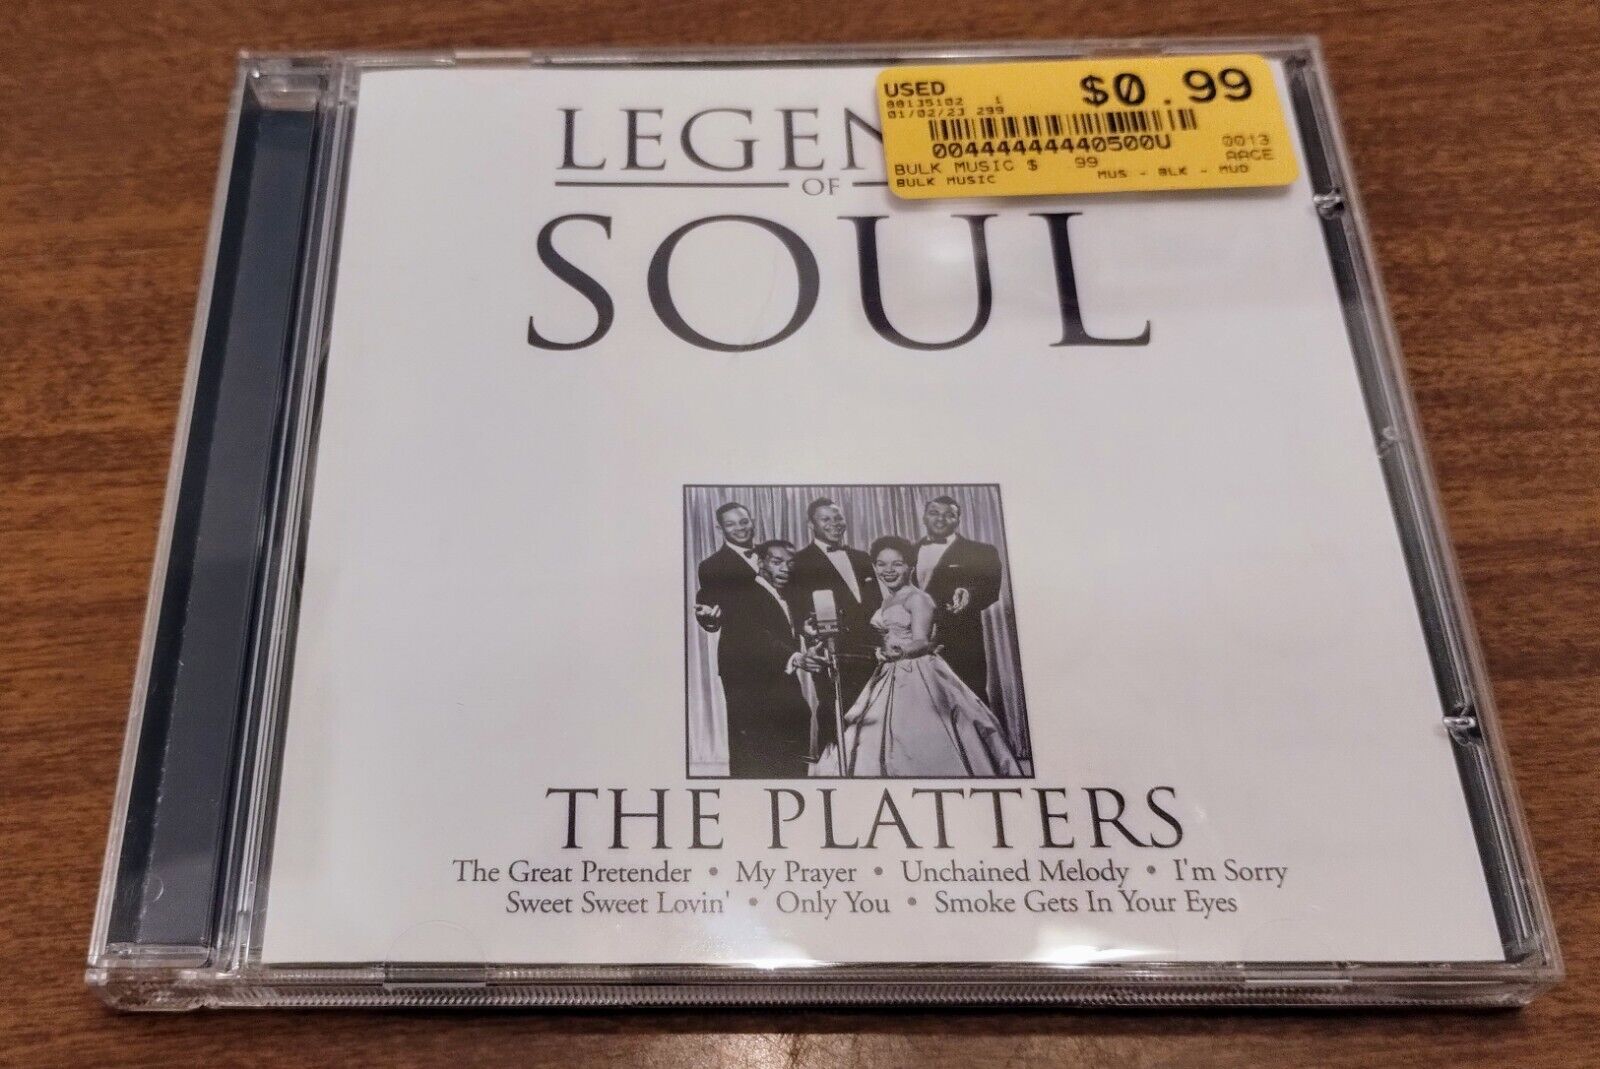 The Platters - Legends of Soul (CD, 2007)